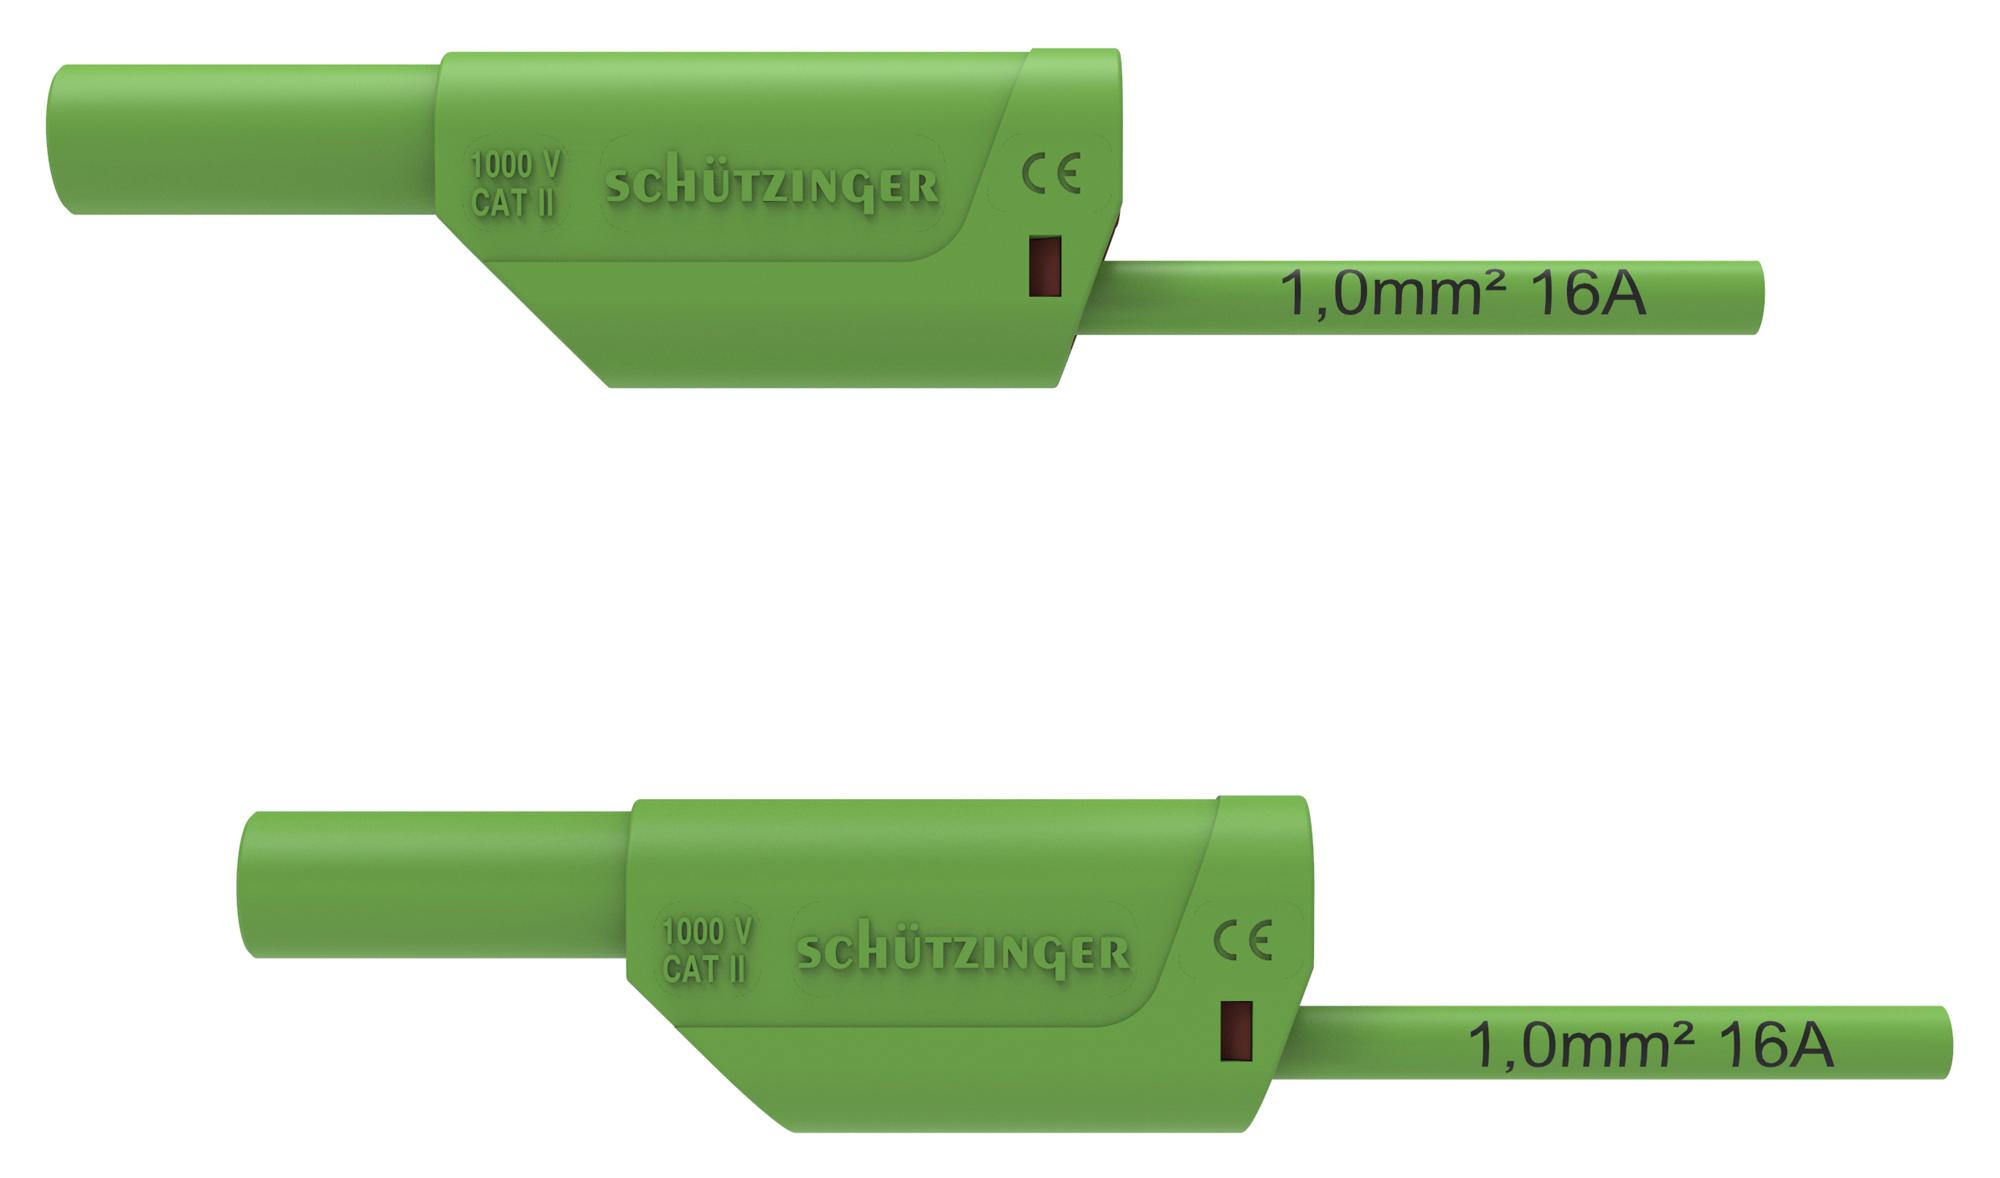 Schutzinger Di Vsfk 8500 / 1 / 200 / Gn 4mm Banana Plug-Sq, Shrouded, Green, 2M